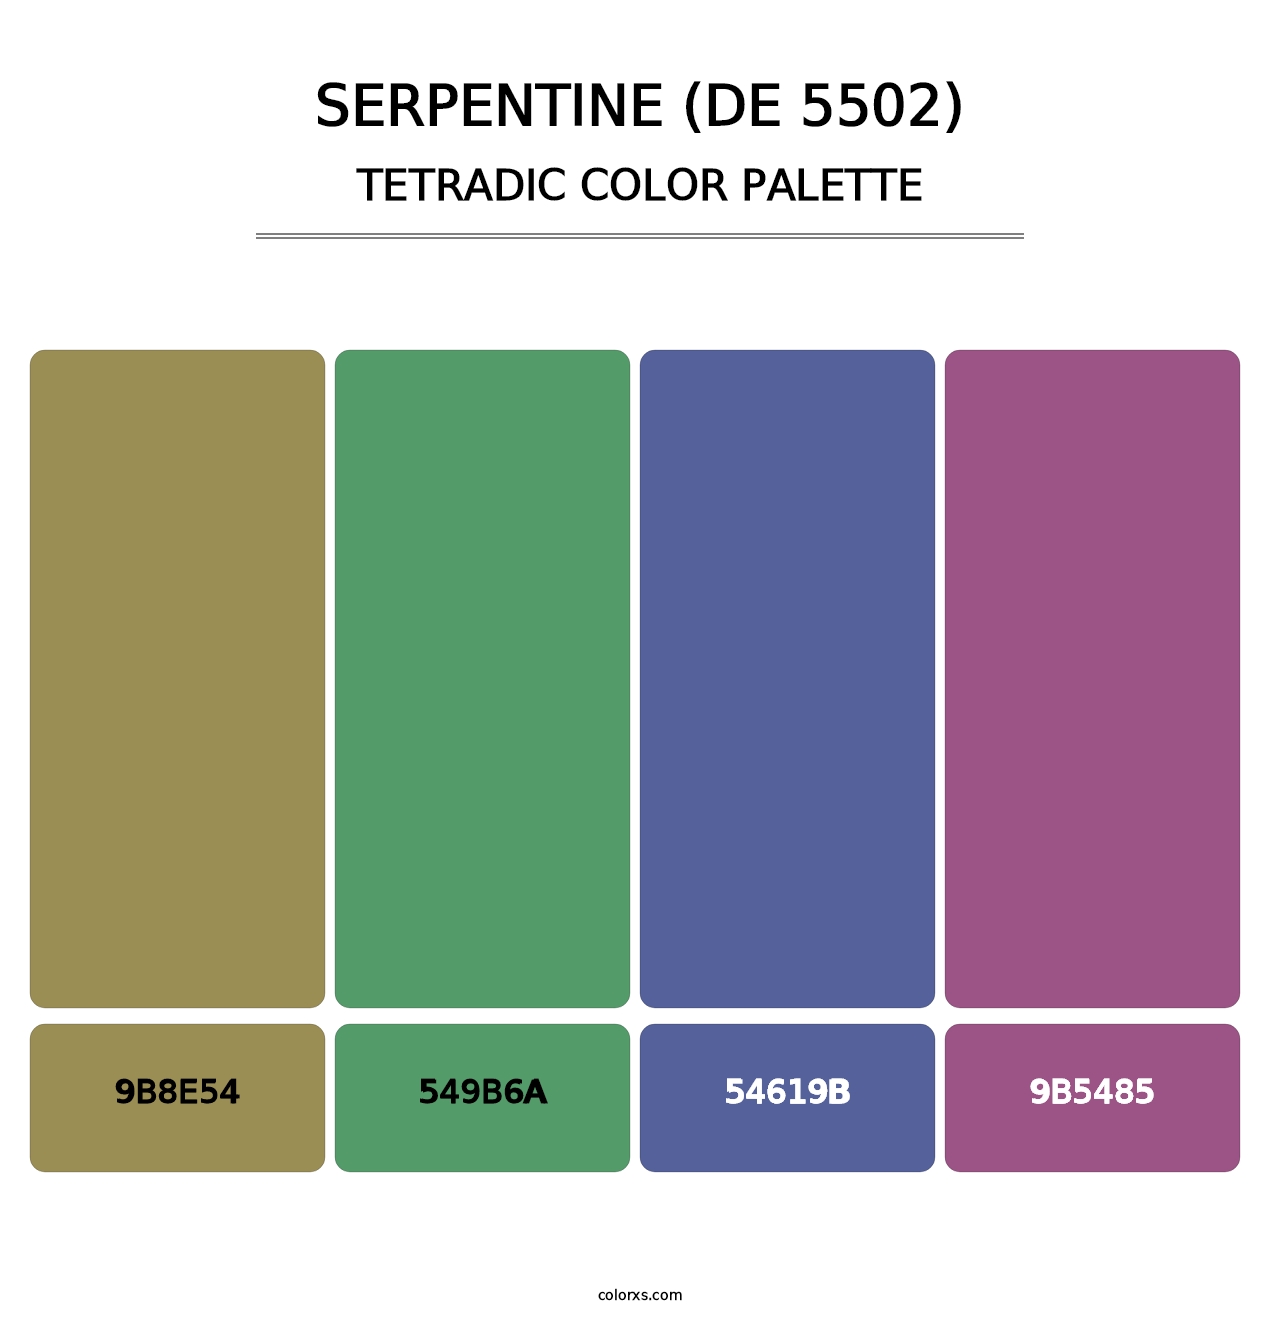 Serpentine (DE 5502) - Tetradic Color Palette